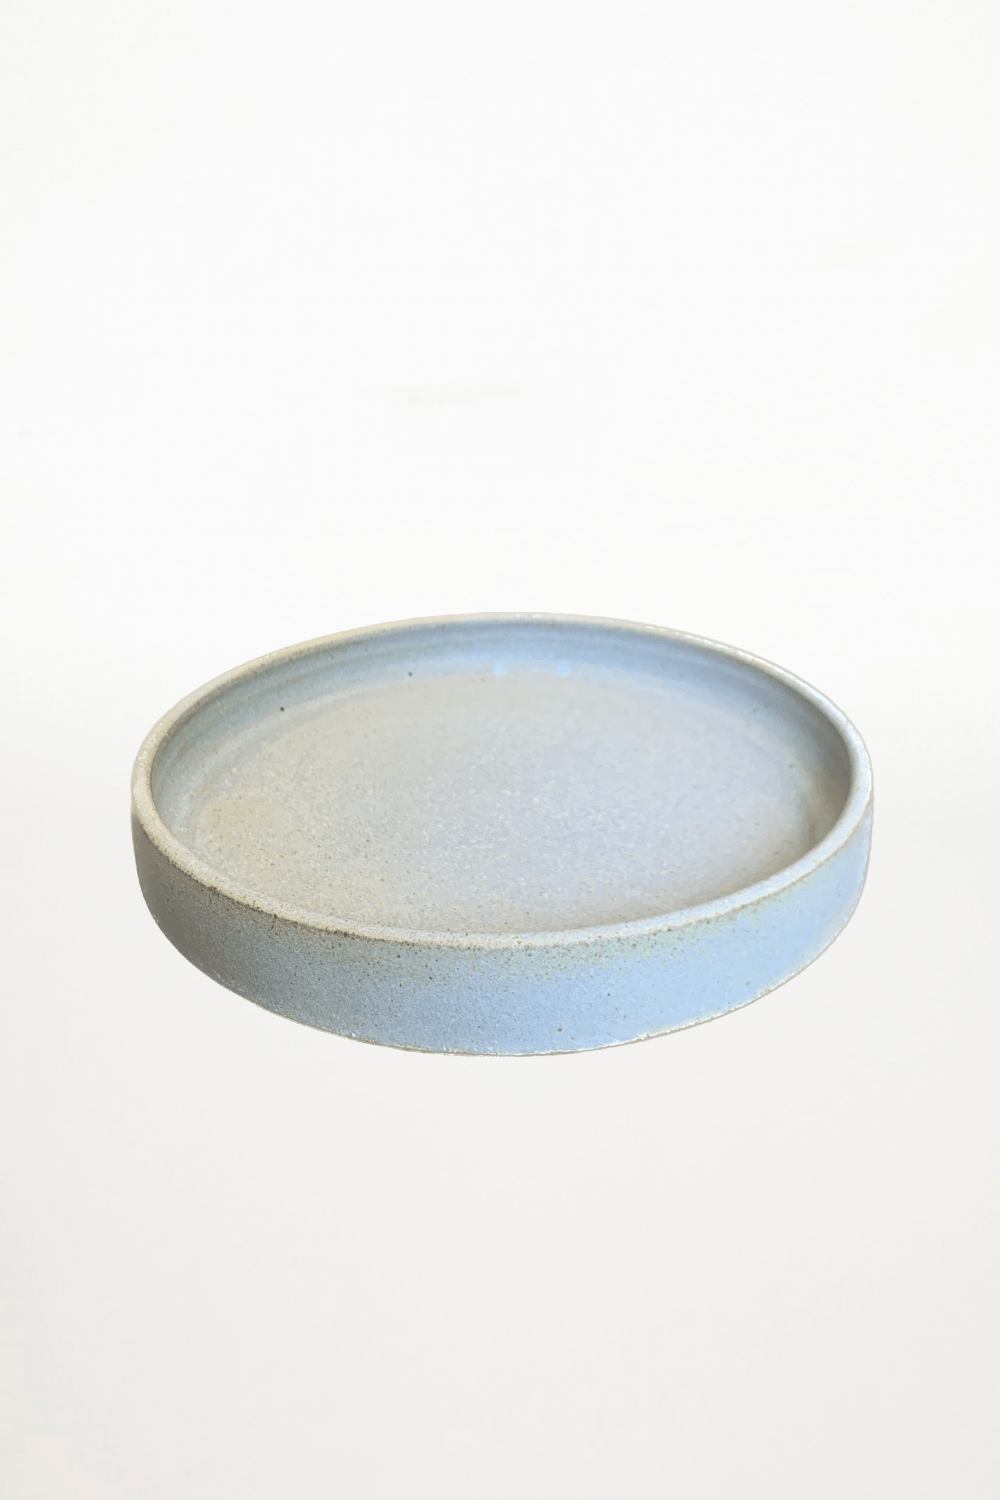 Aburi Ceramics - Share Plate - Eggshell - Ensemble Studios